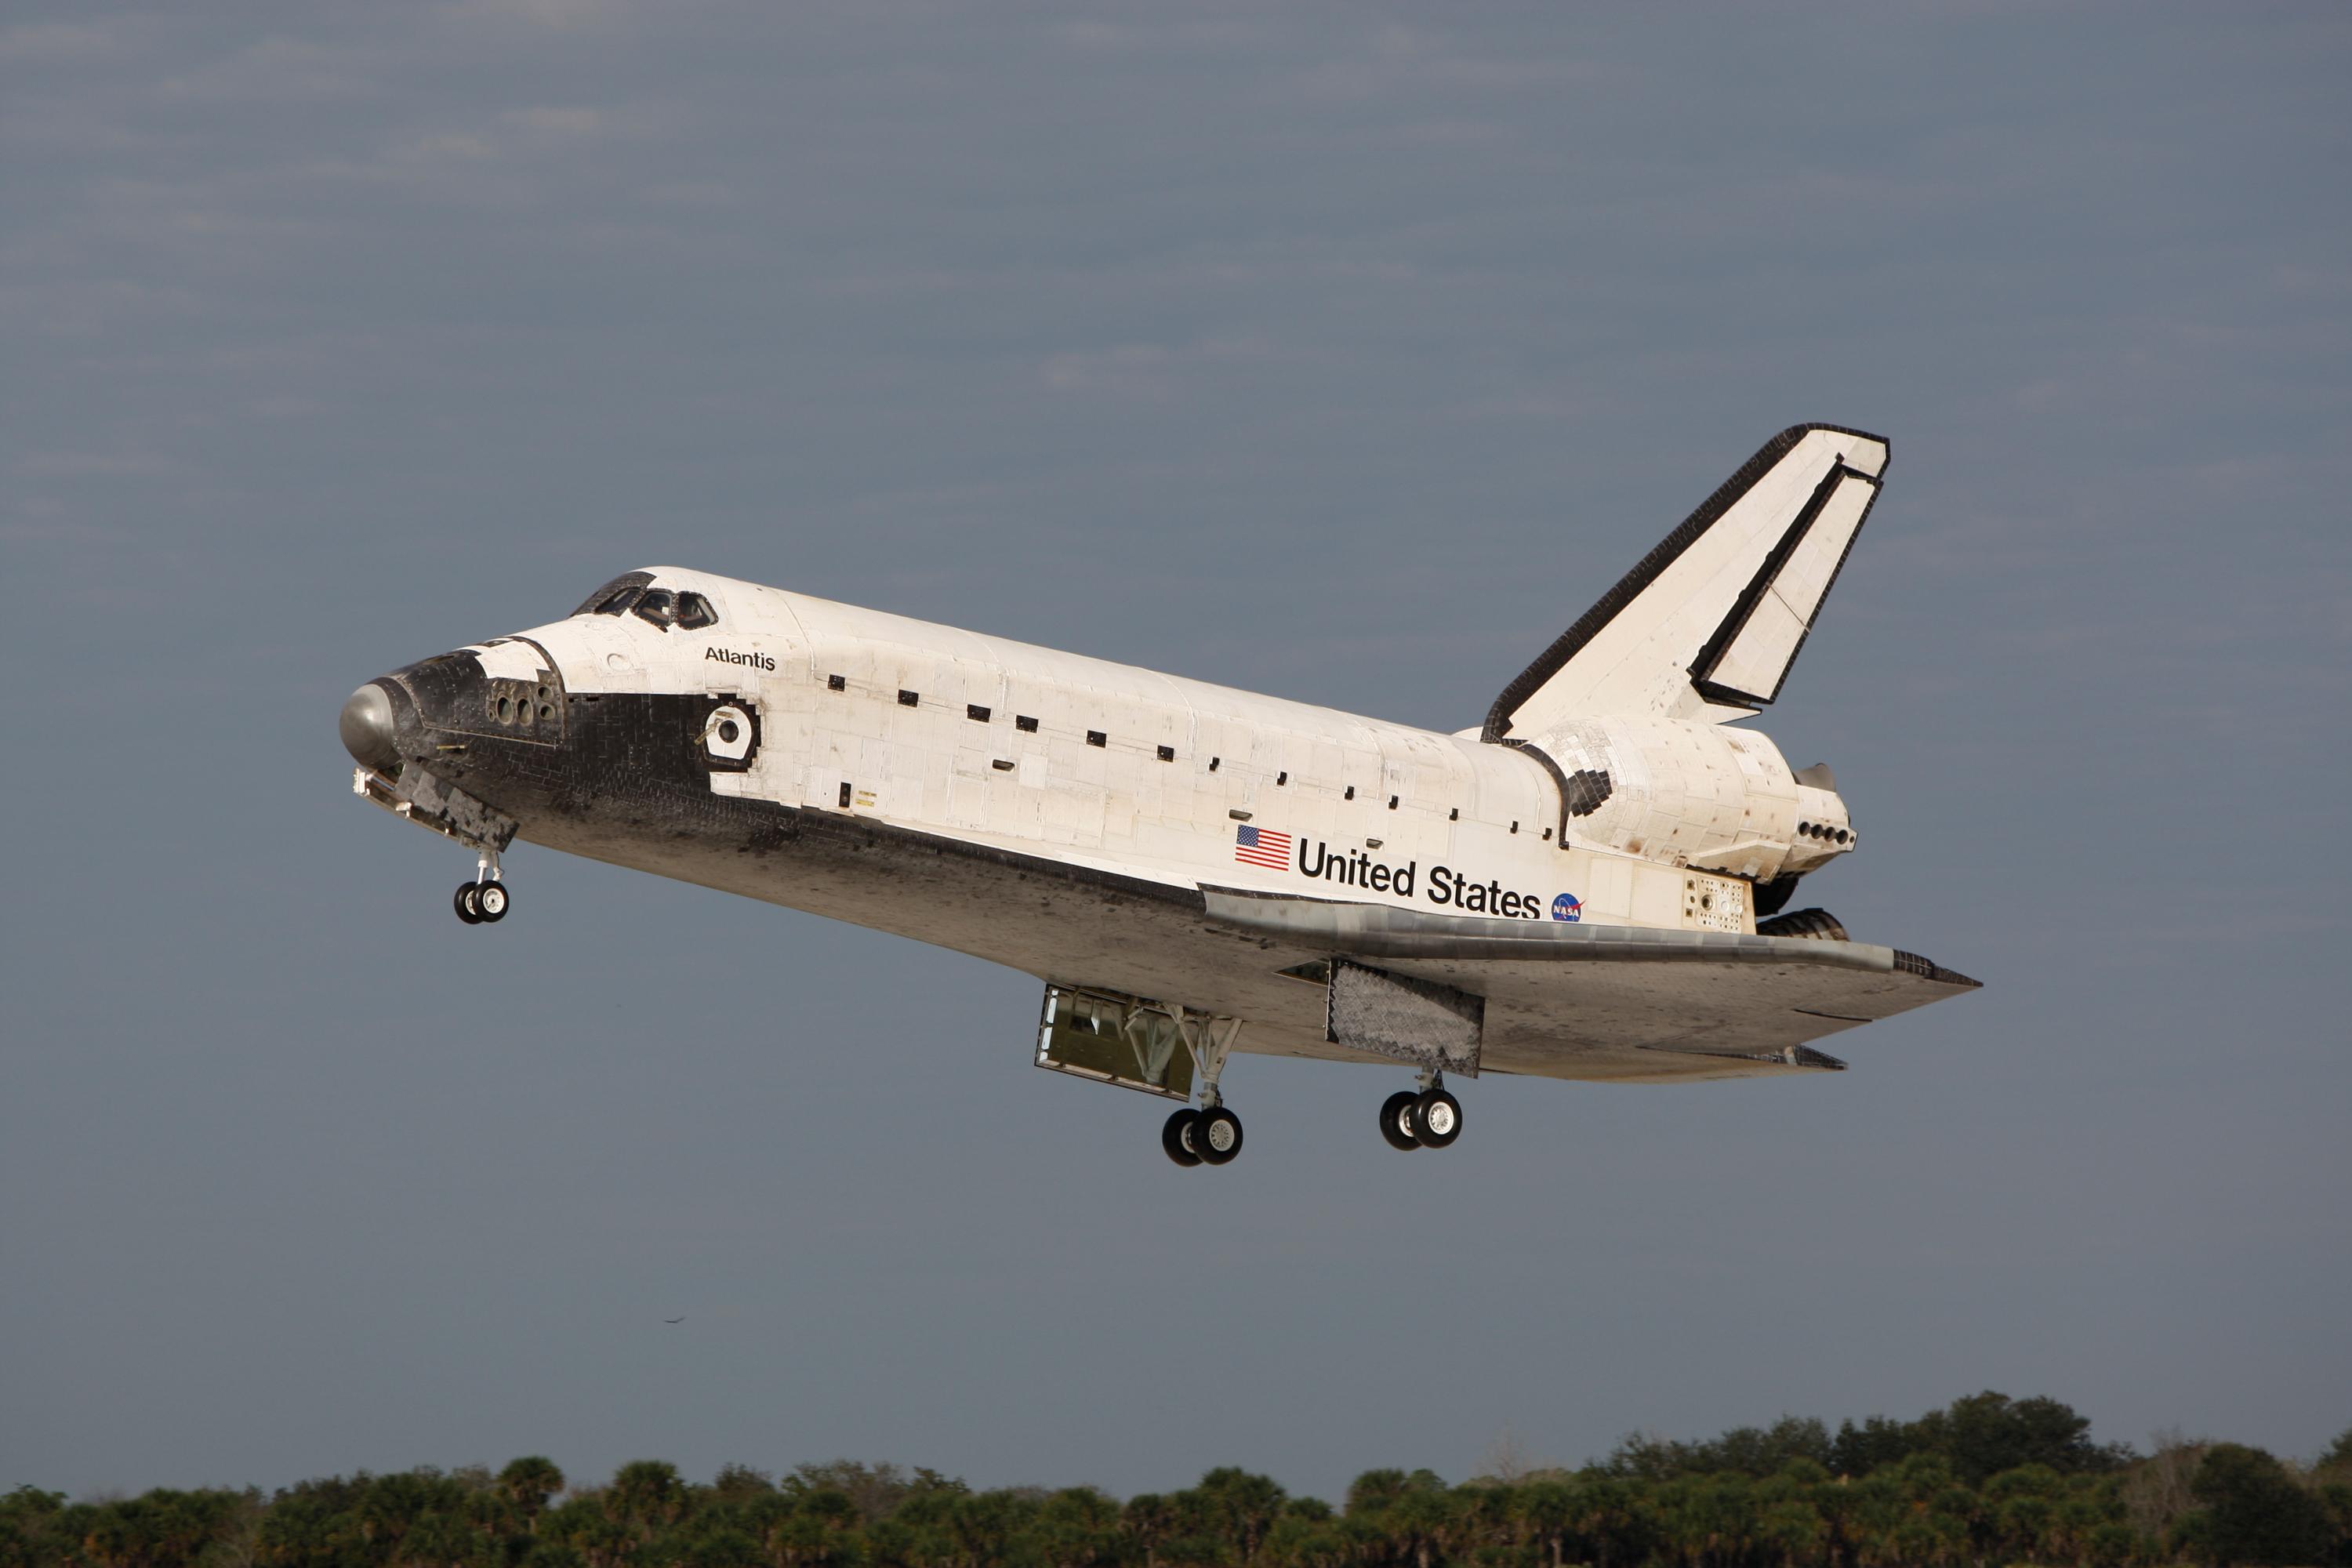 Space_Shuttle_Atlantis_landing_at_KSC_following_STS-122.jpg